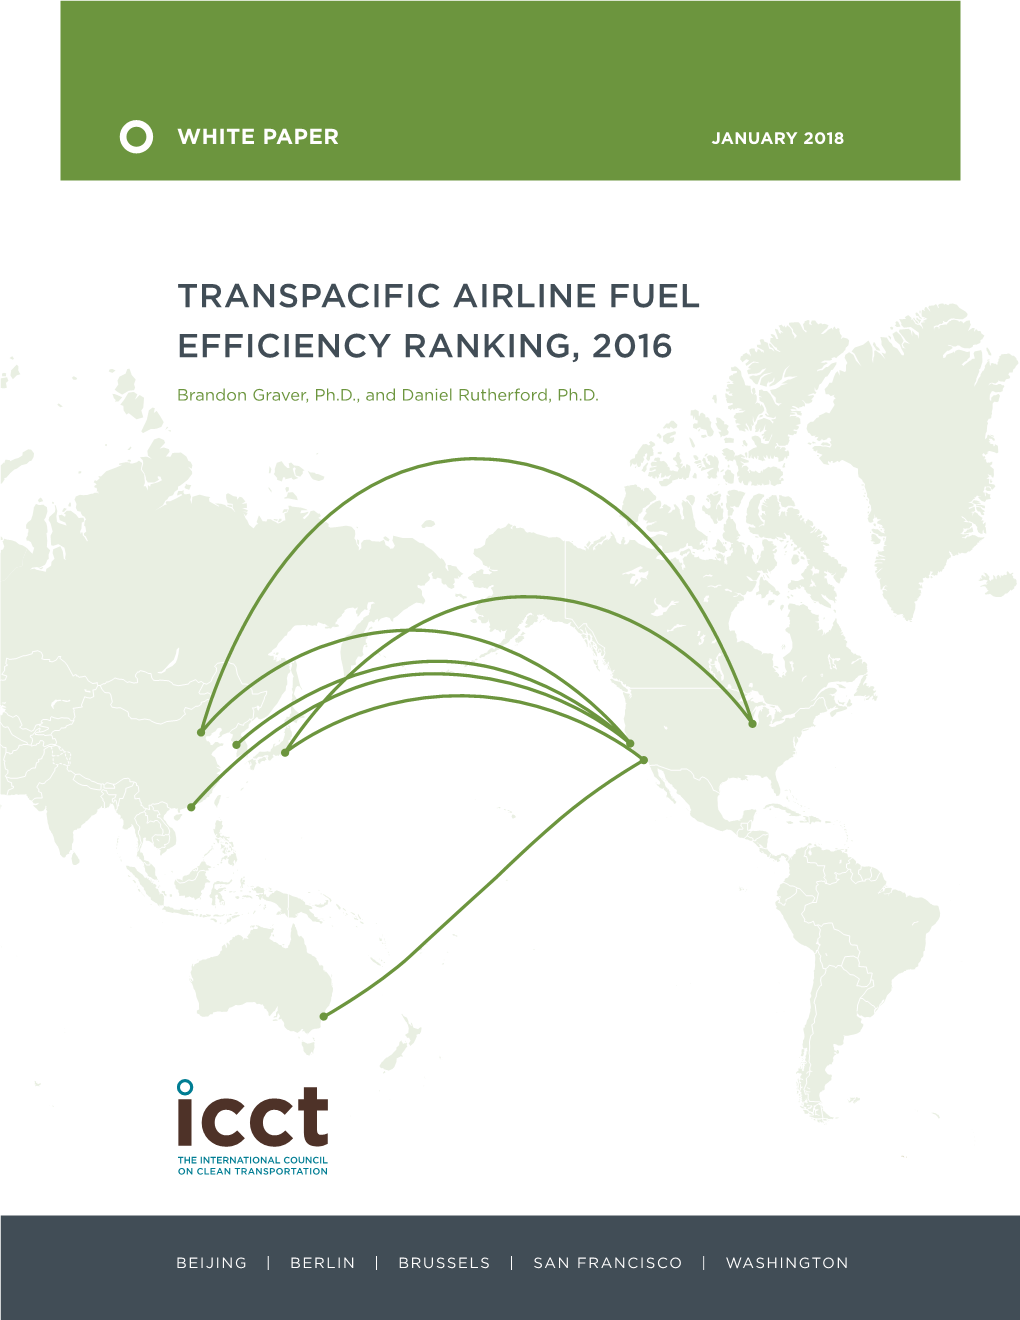 Transpacific Airline Fuel Efficiency Ranking, 2016